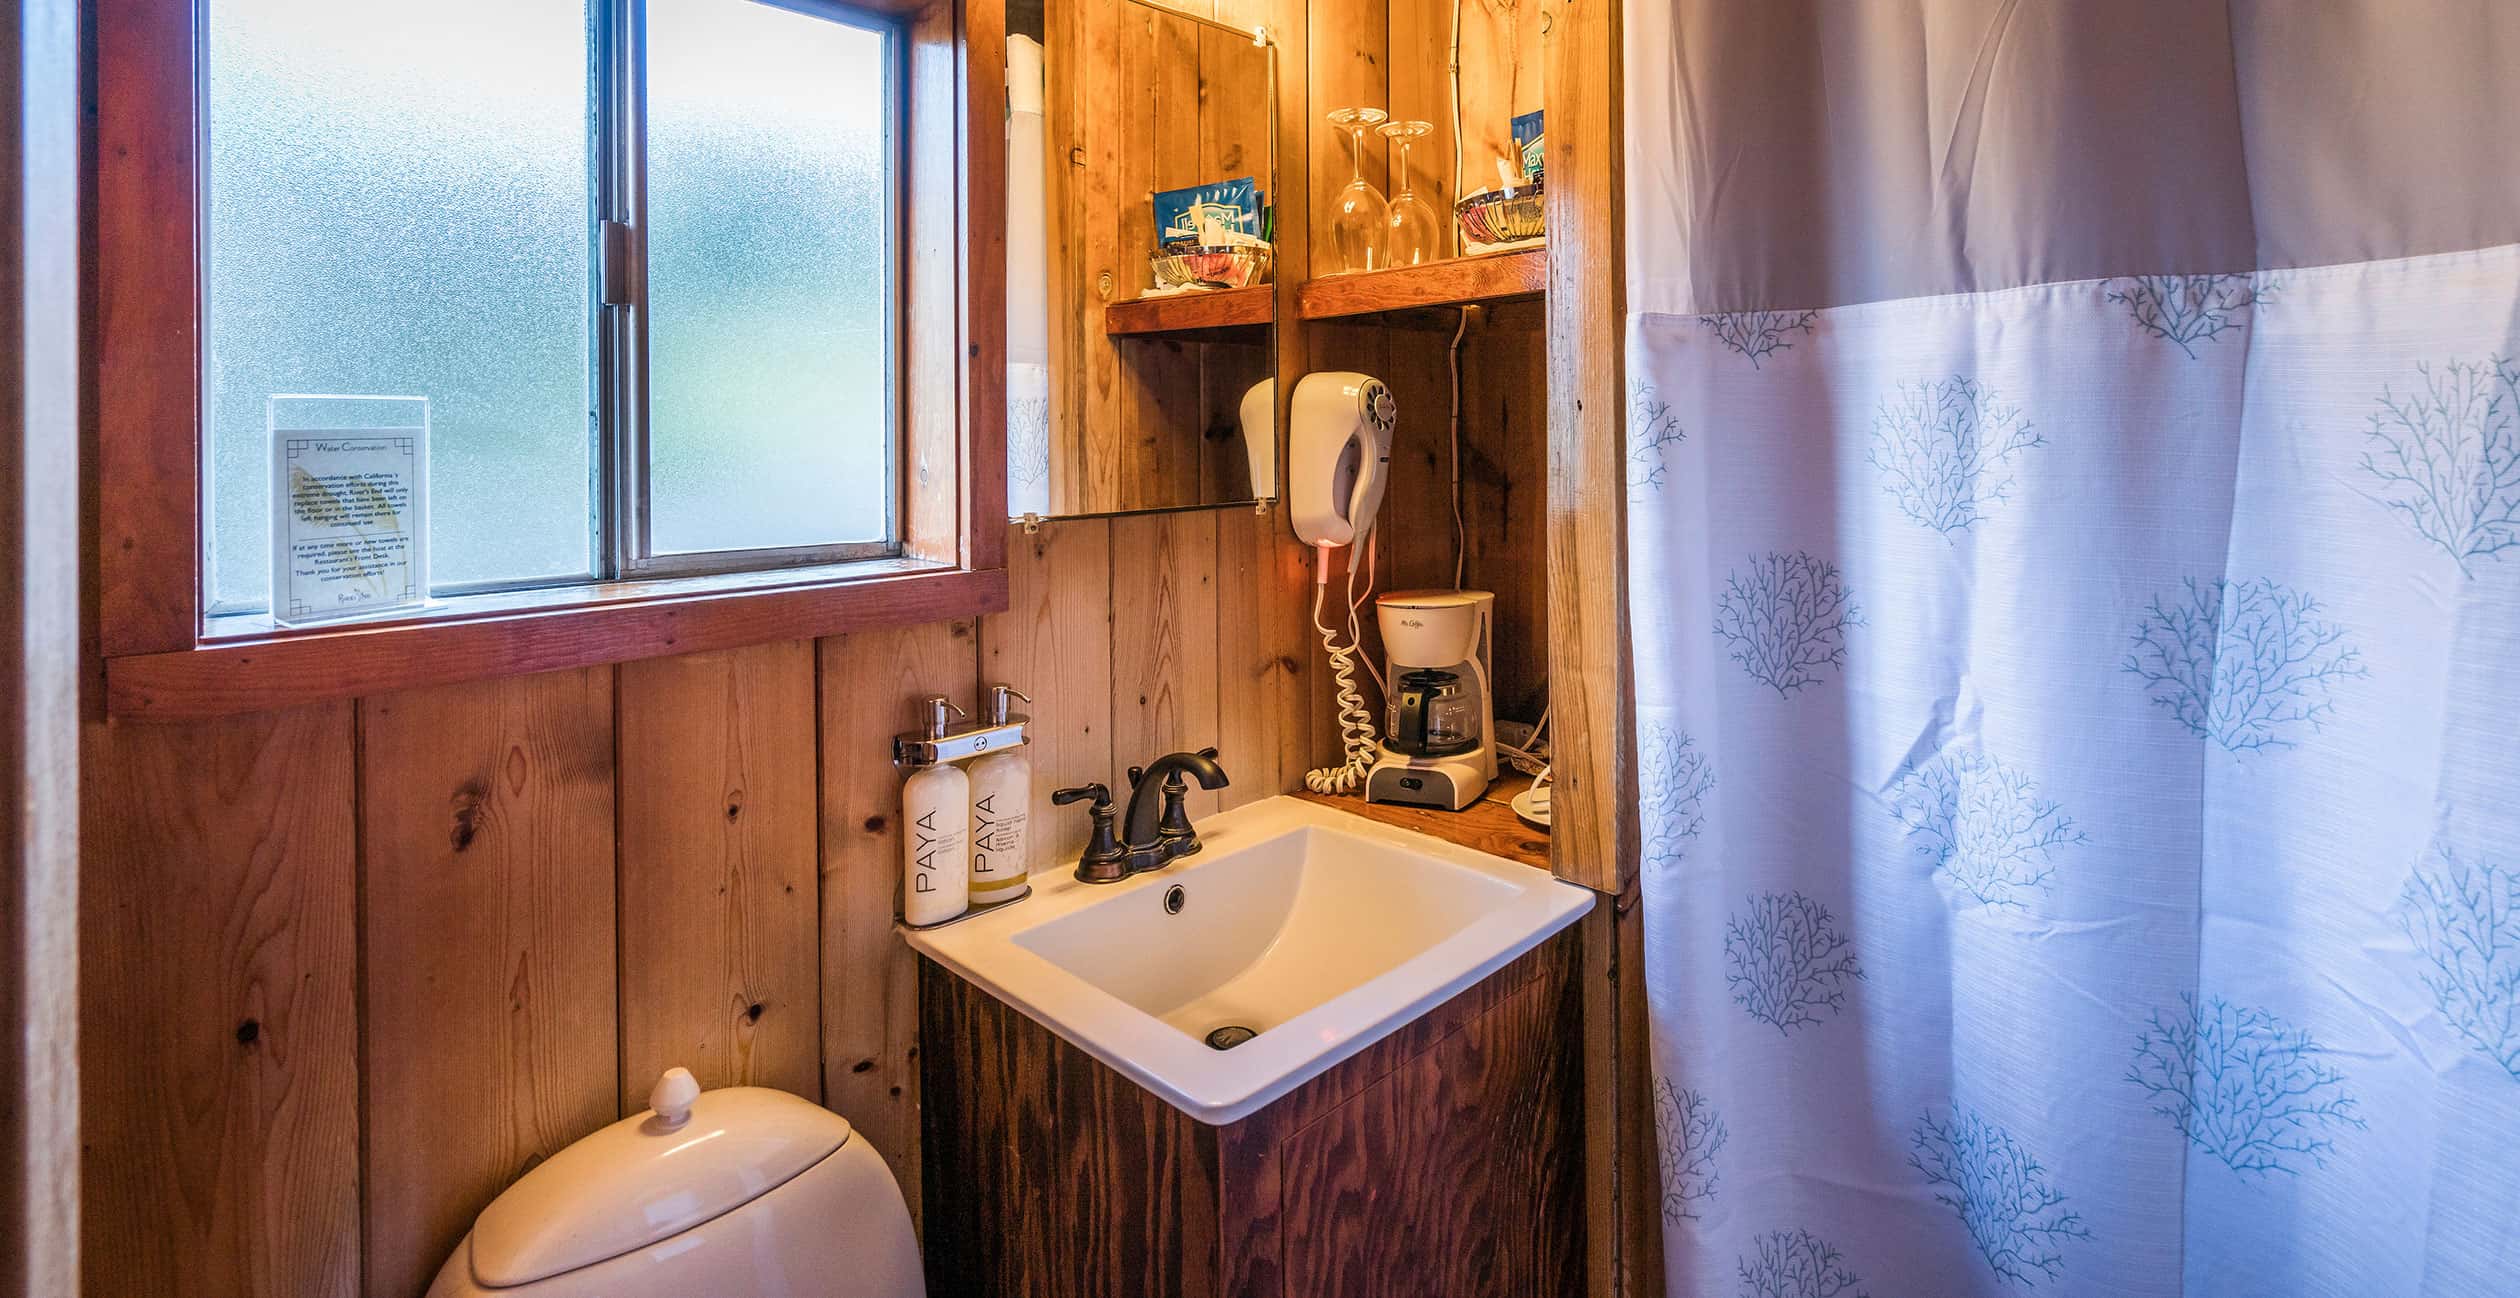 Sink by shower curtain in pristine Cabin 3 bathroom